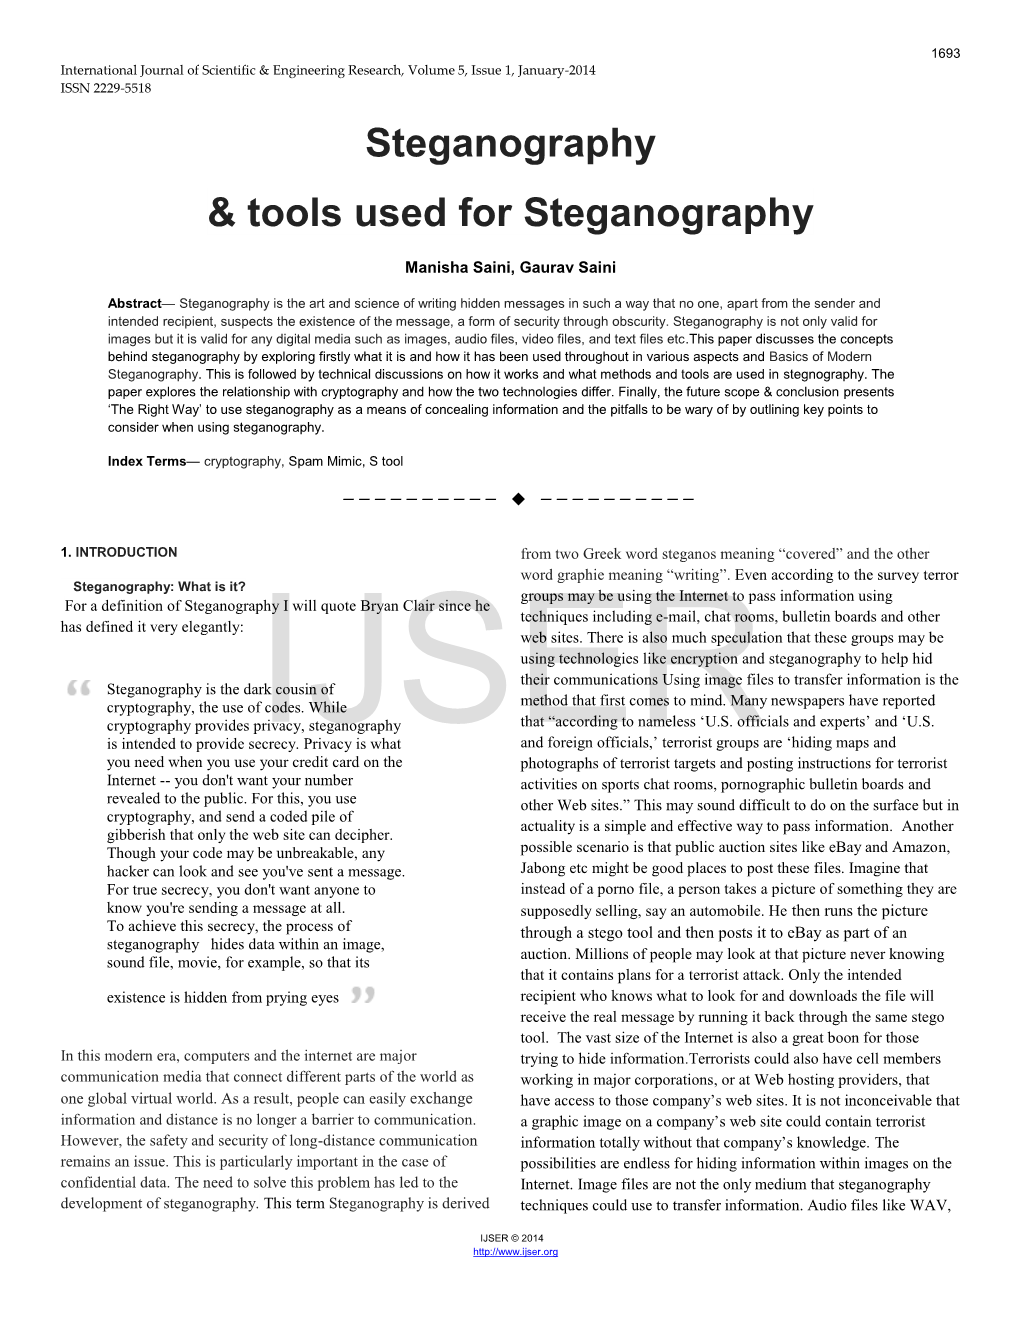 Steganography & Tools Used for Steganography